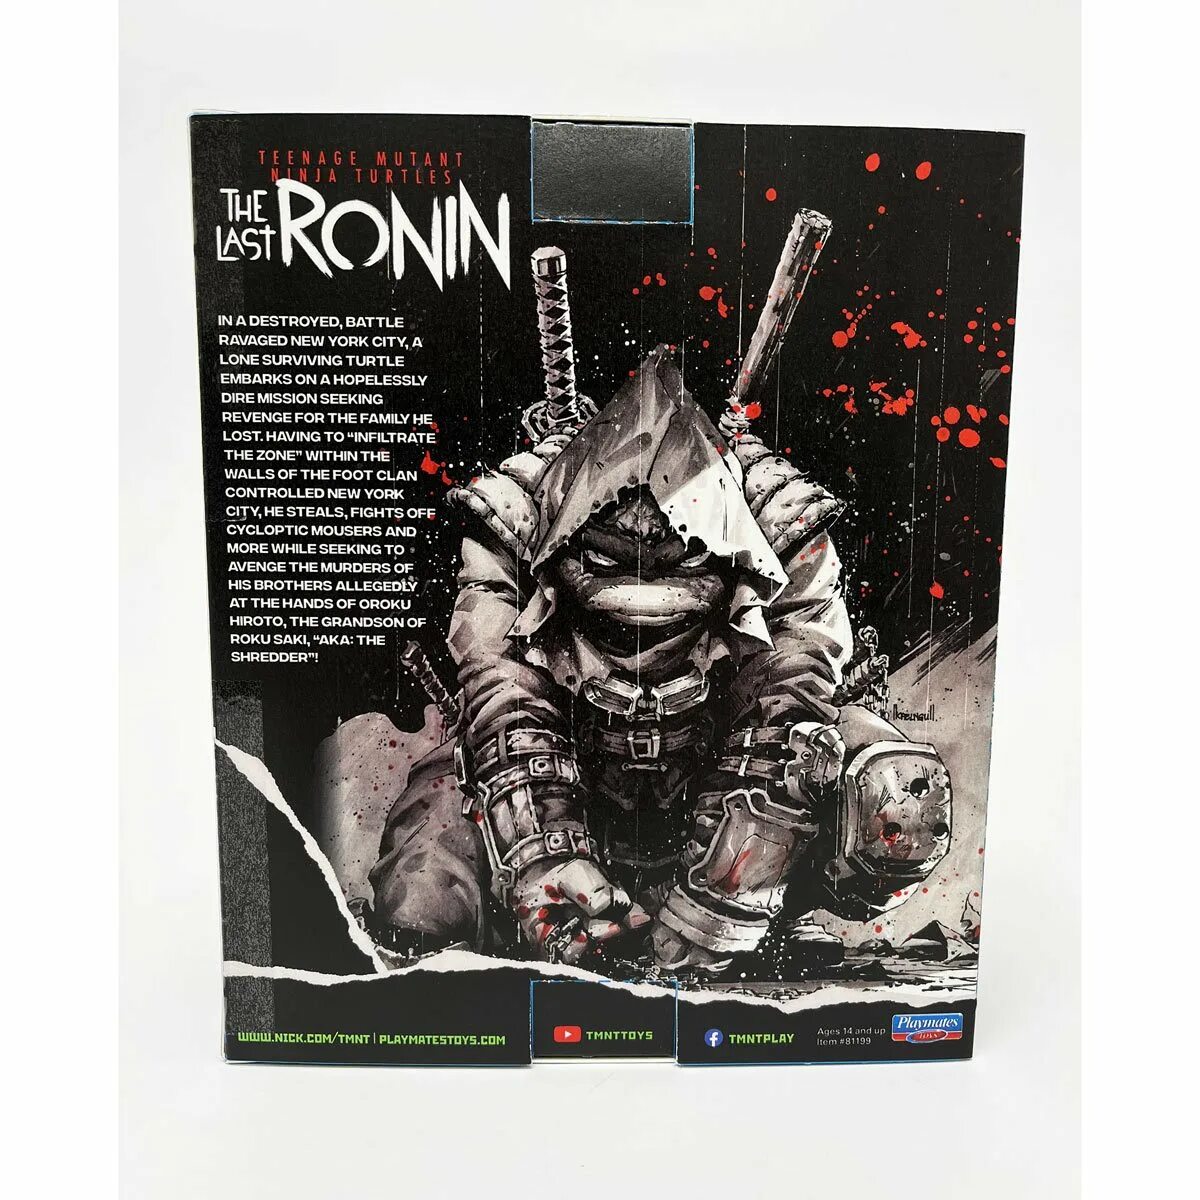 TMNT Ronin. The last Ronin Черепашки ниндзя. Комикс teenage Mutant Ninja Turtles: the last Ronin. The last Ronin TMNT фигурка.